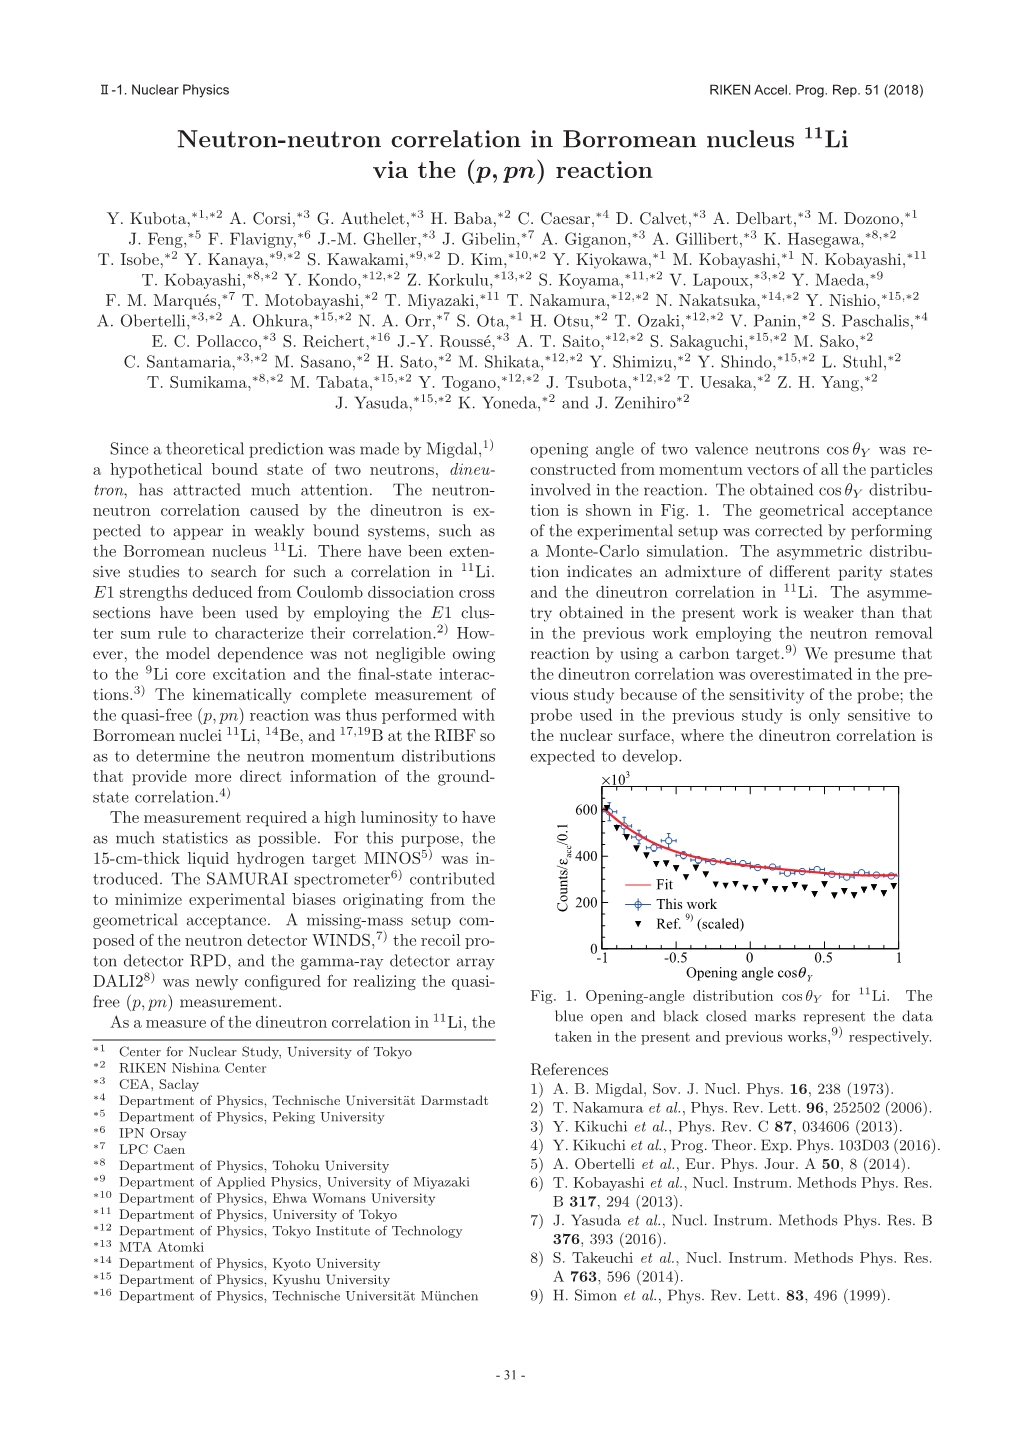 Neutron-Neutron Correlation in Borromean Nucleus 11Li Via the (P